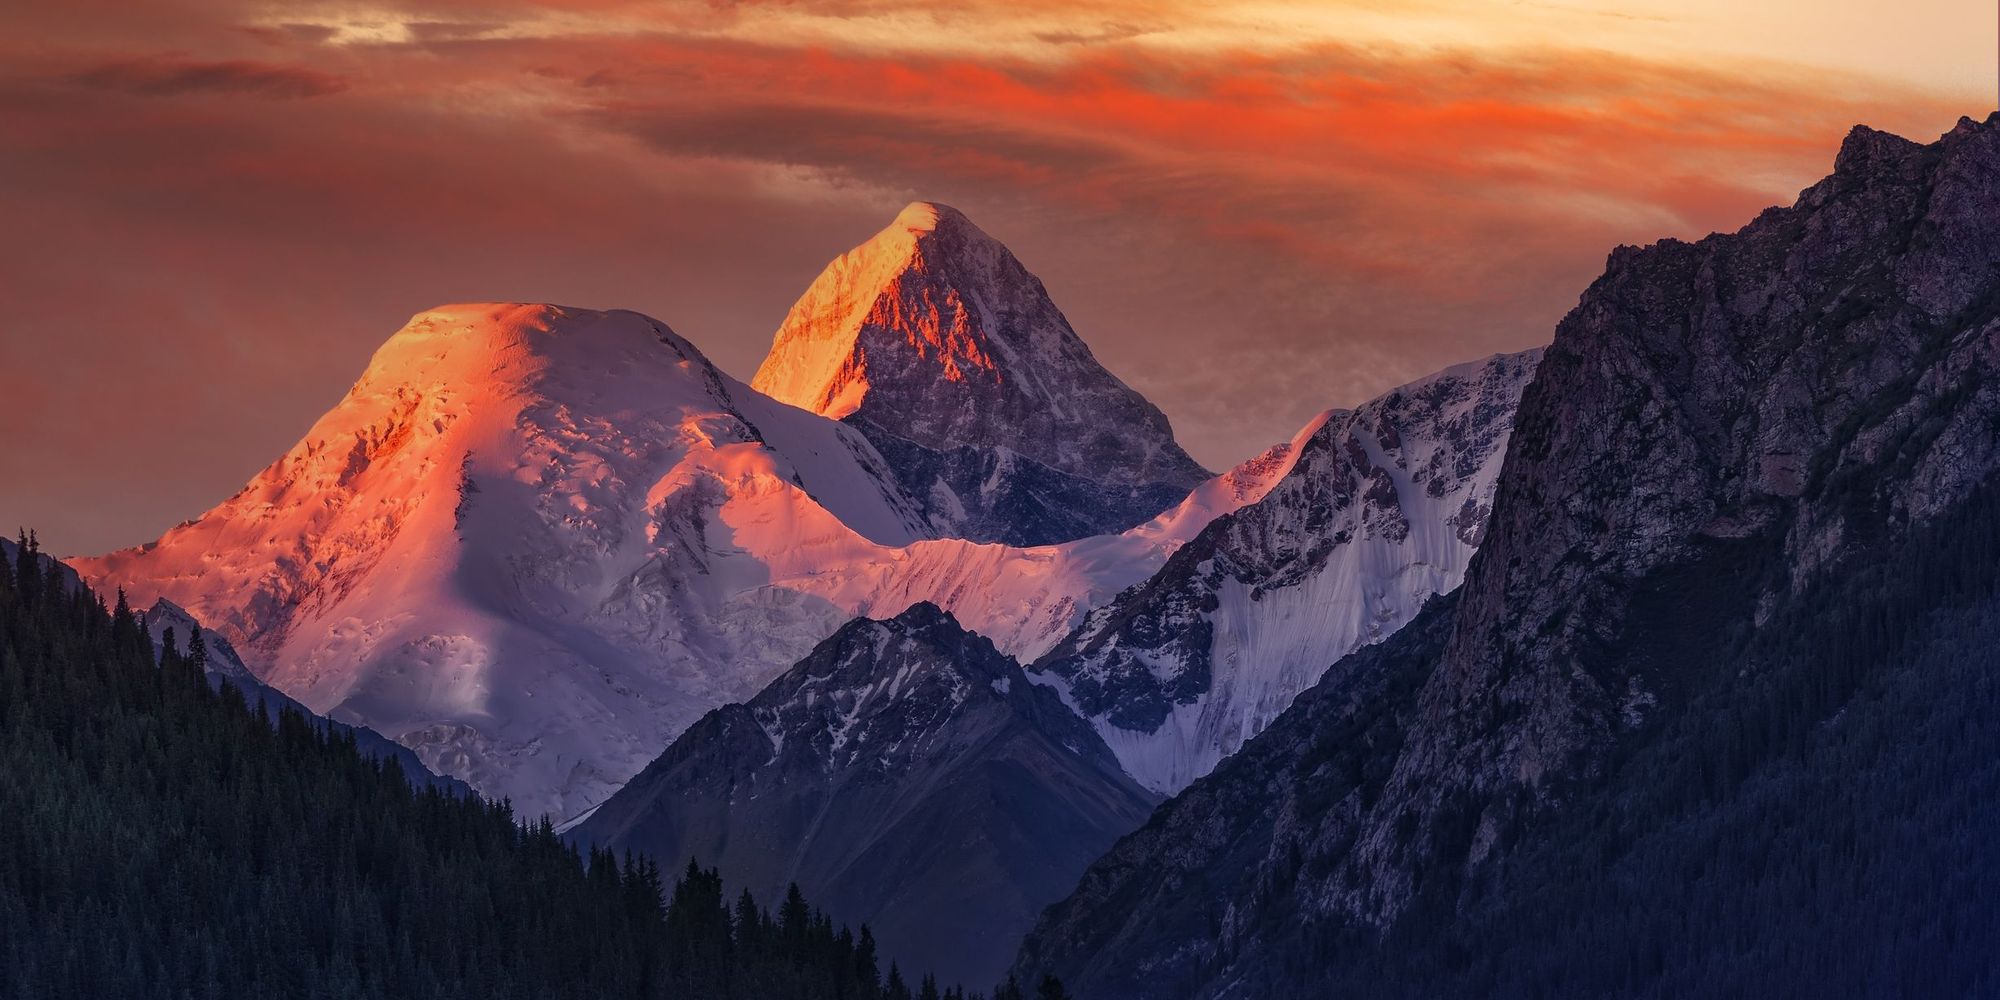 The snowcapped summit of Khan Tengri reflecting orange light at sunrise.